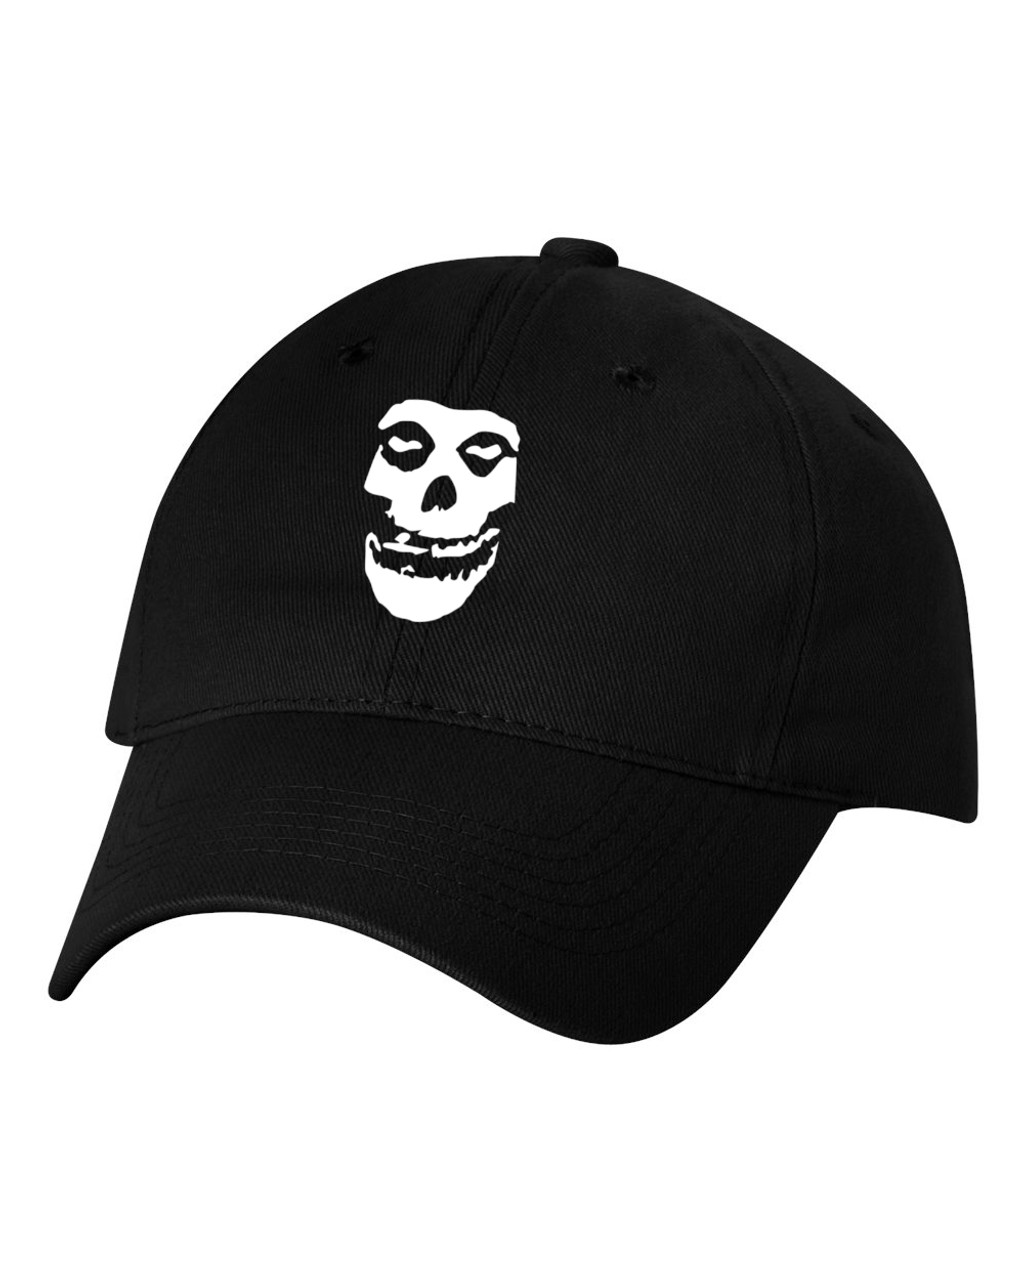 Mari Kyrios Misfit Punk Rock Fiend Skull Hat Adult Black Twill Adjustable Cap